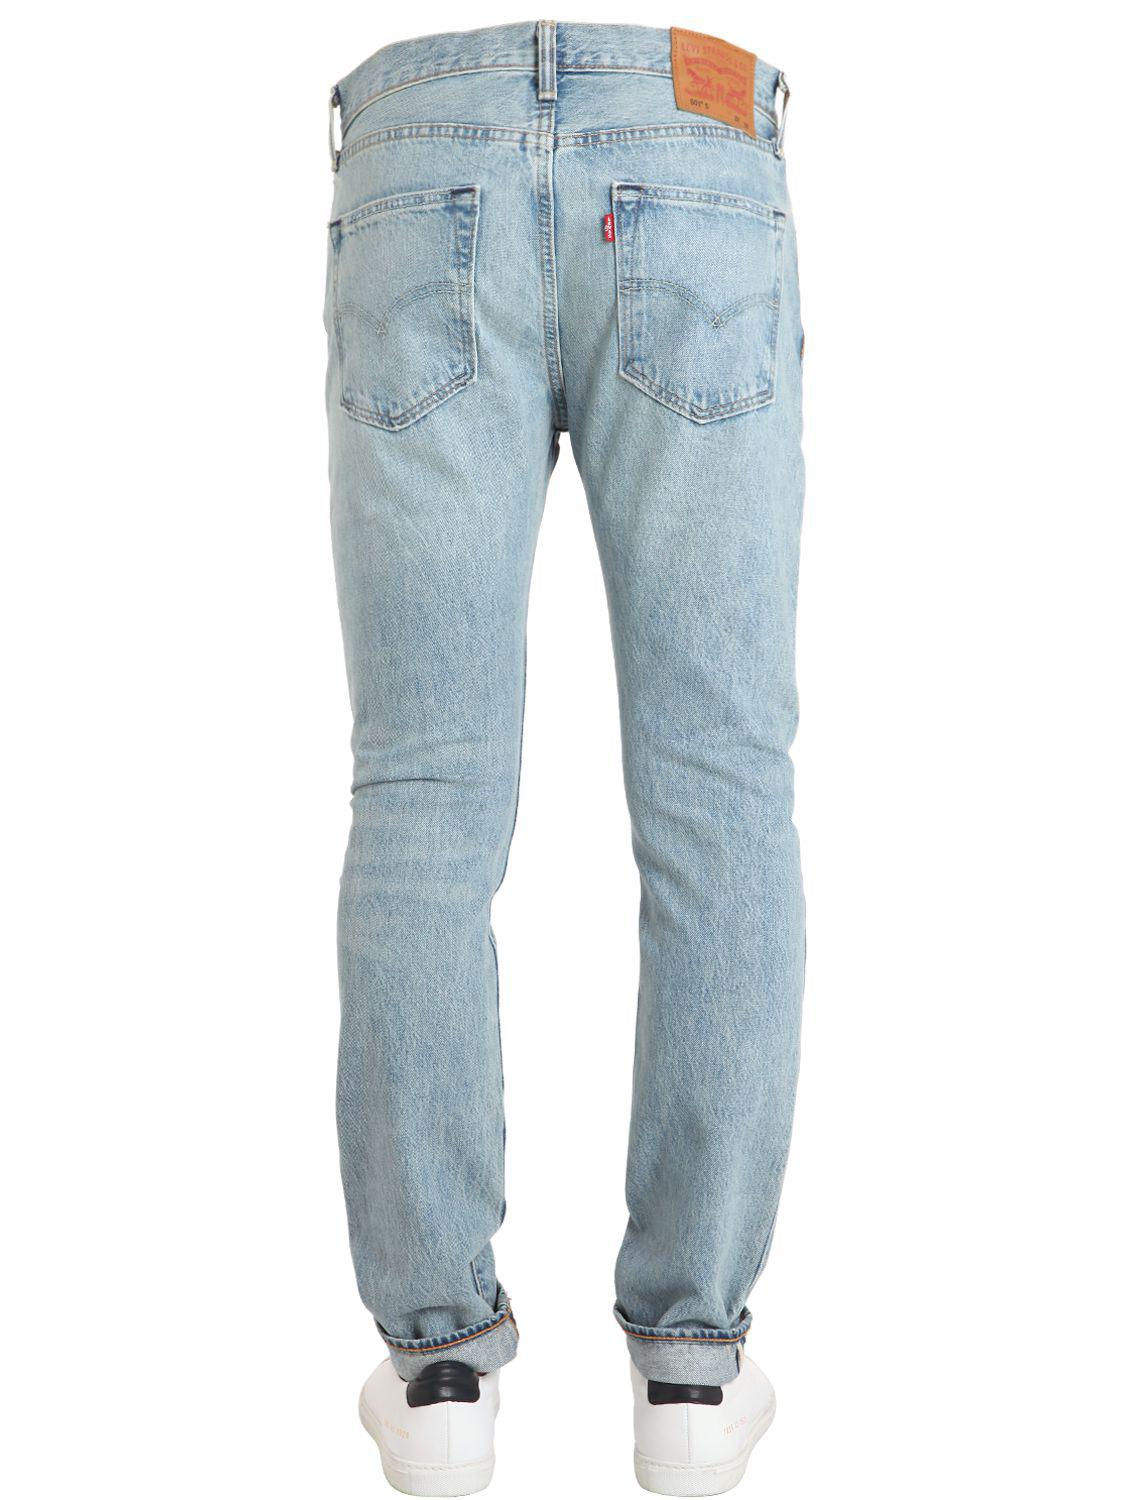 Lyst - Levi'S 501 Skinny Stretch Denim Jeans in Blue for Men